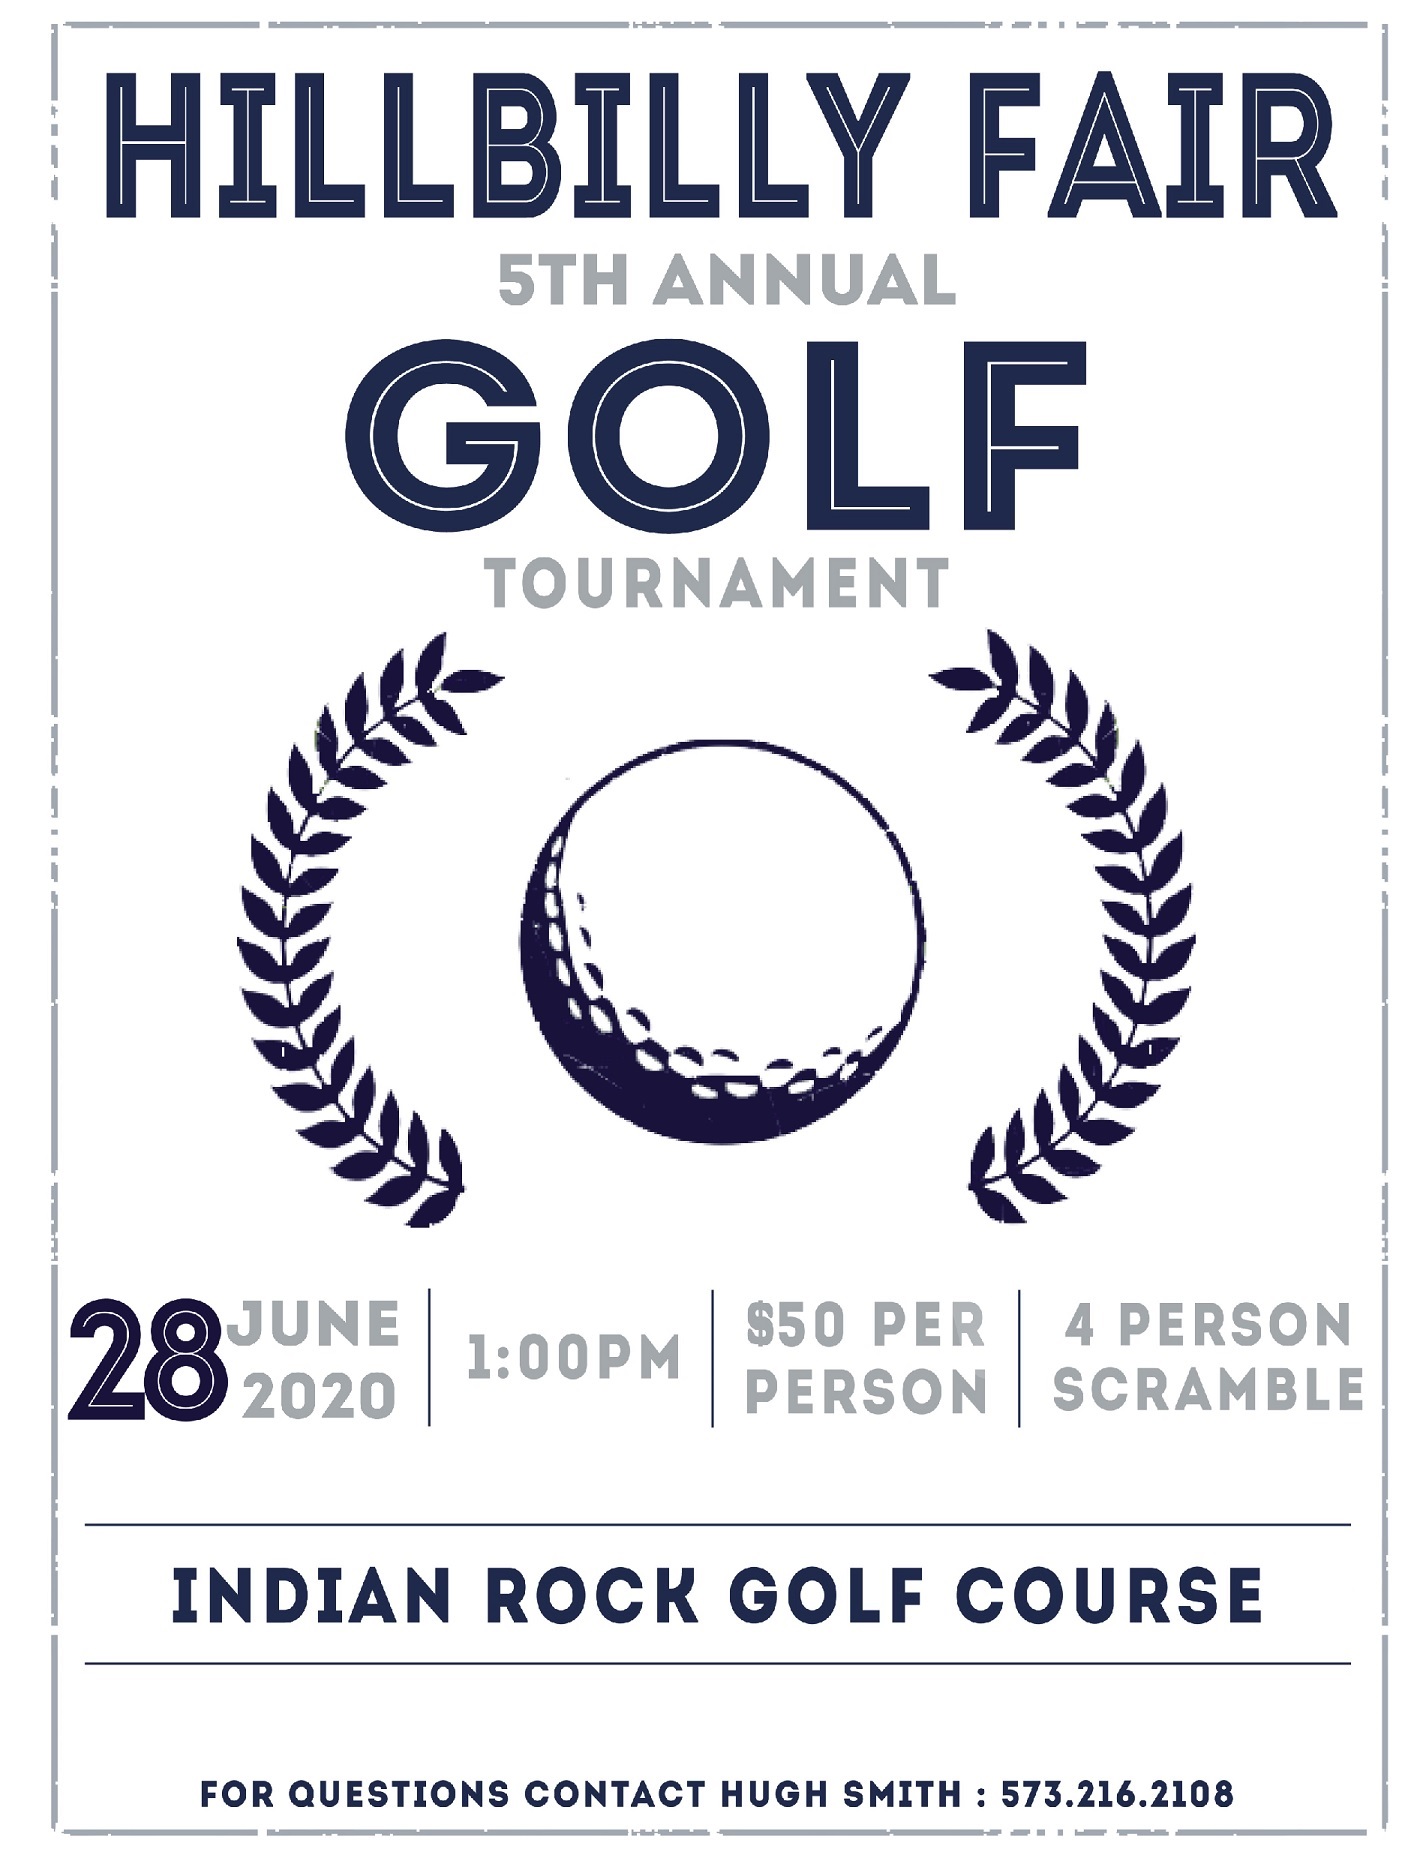 HillBilly Fair Golf Tournament Indian Rock Golf Club